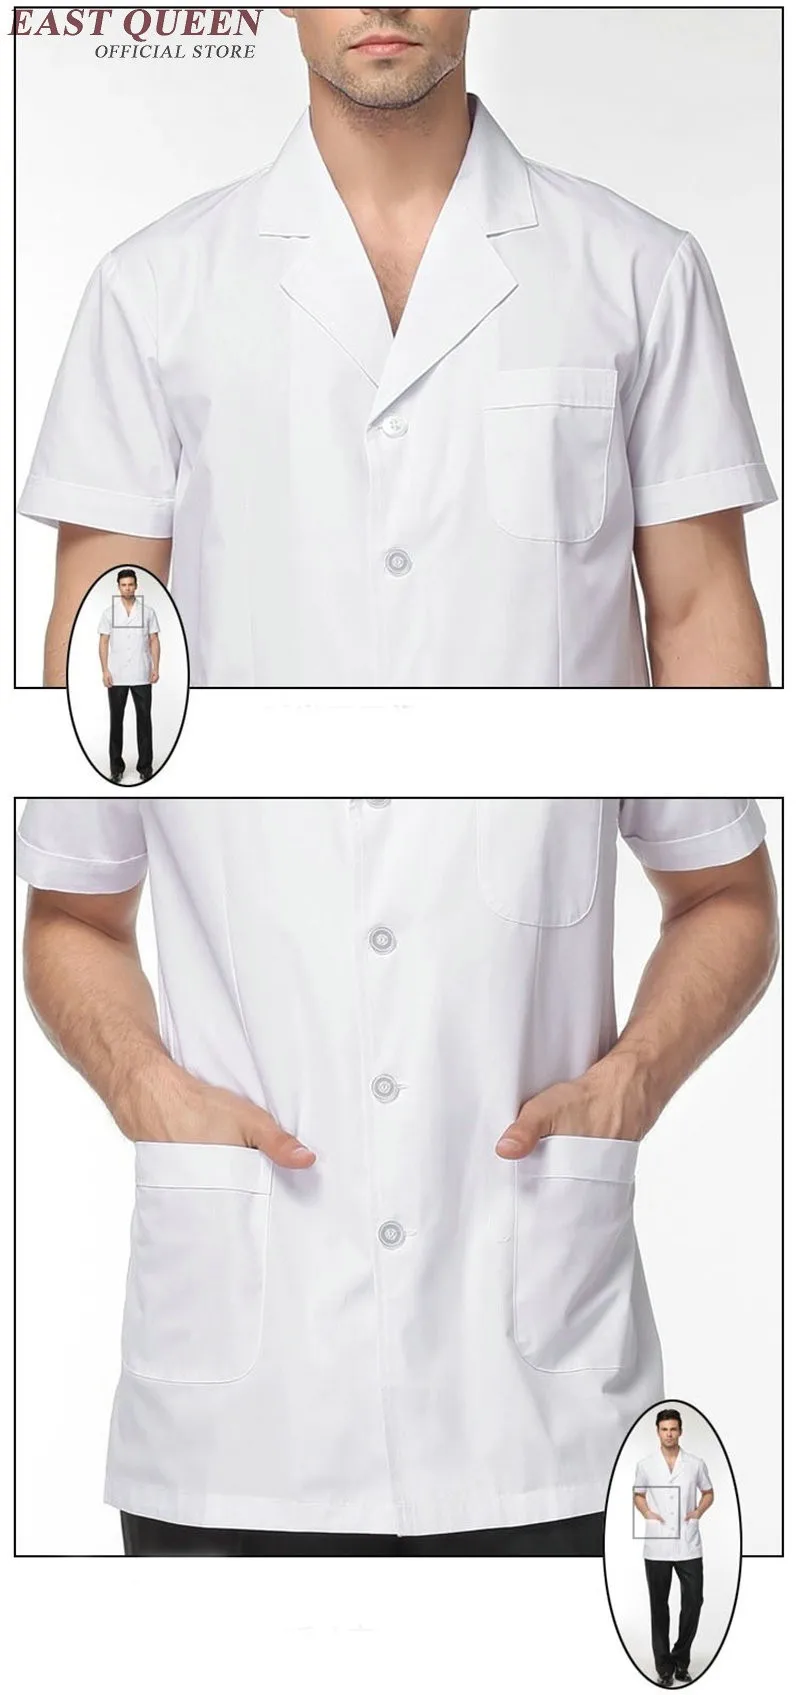 Лабораторное пальто для мужчин белая медицинская одежда халаты медицинская Униформа короткий халат белый лабораторный медицинский скрабы для мужчин AA880